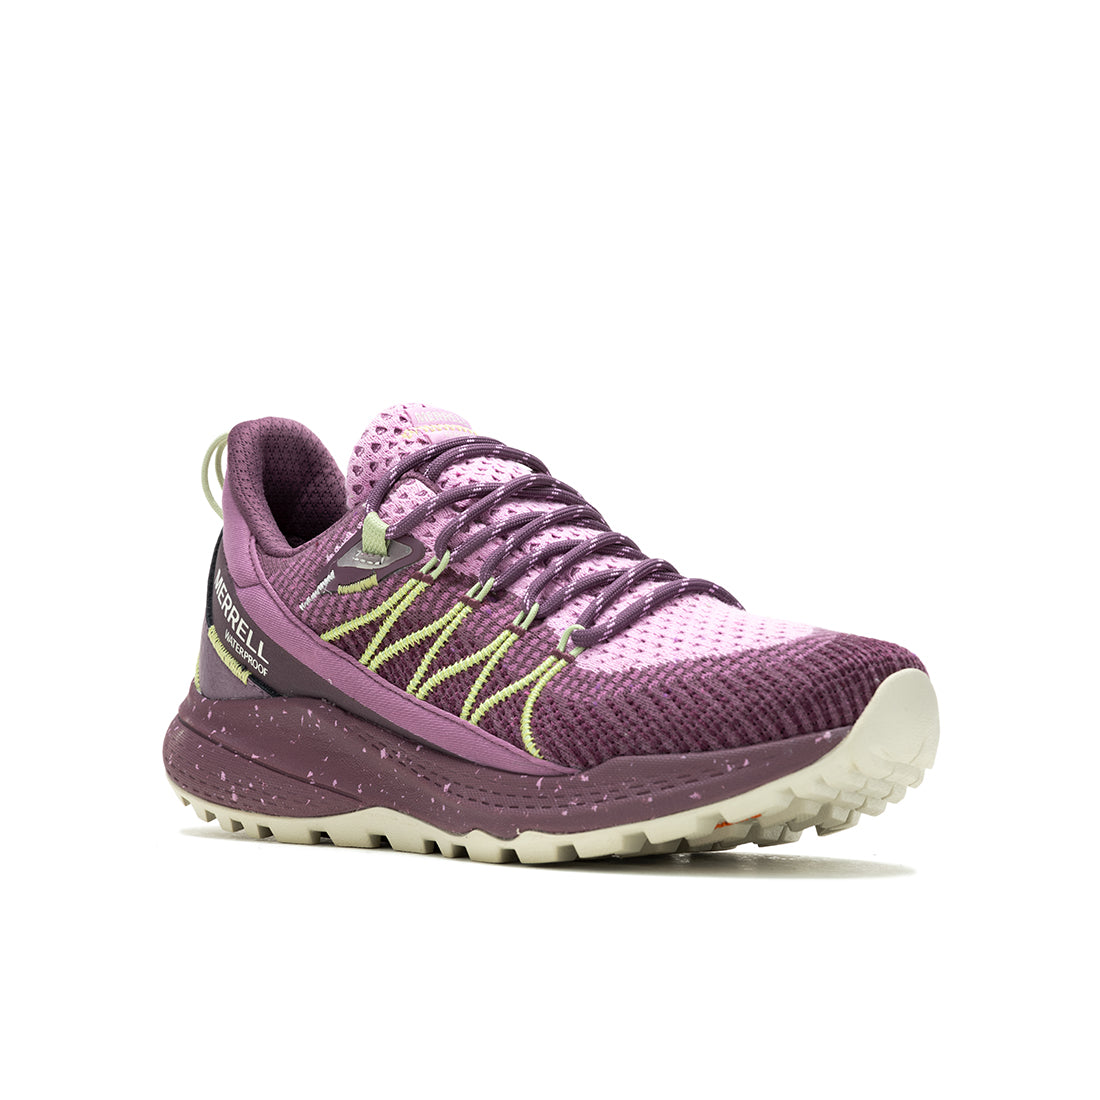 Bravada 2 Waterproof – Mauve Womens Hiking Shoes - 0